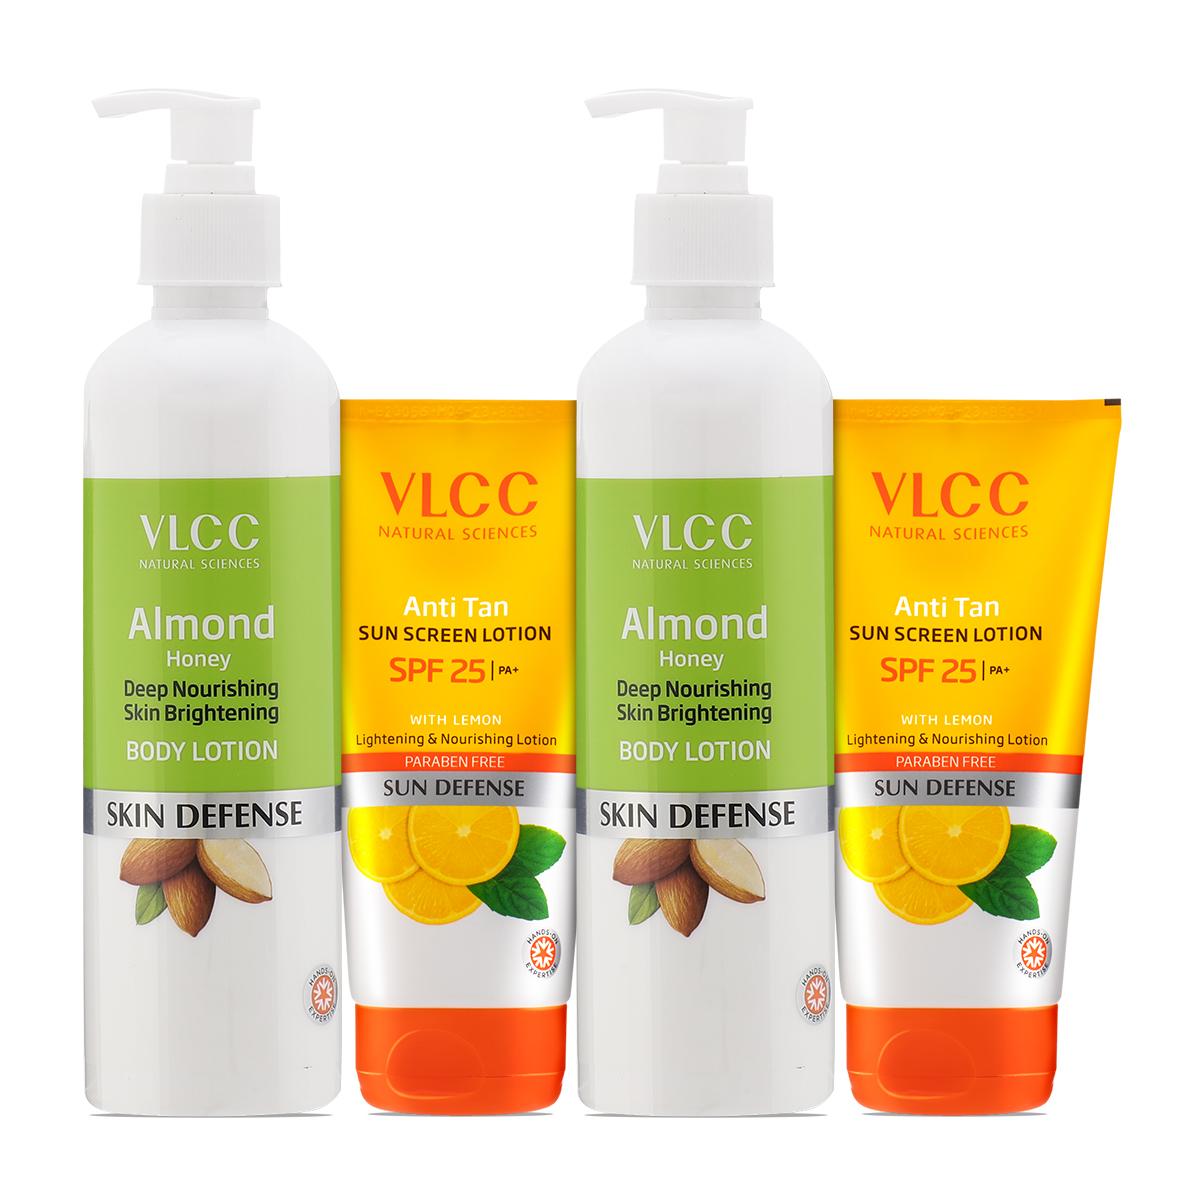 VLCC Anti Tan Sun Screen Lotion SPF 25 & Almond Honey Skin Brightening Body Lotion